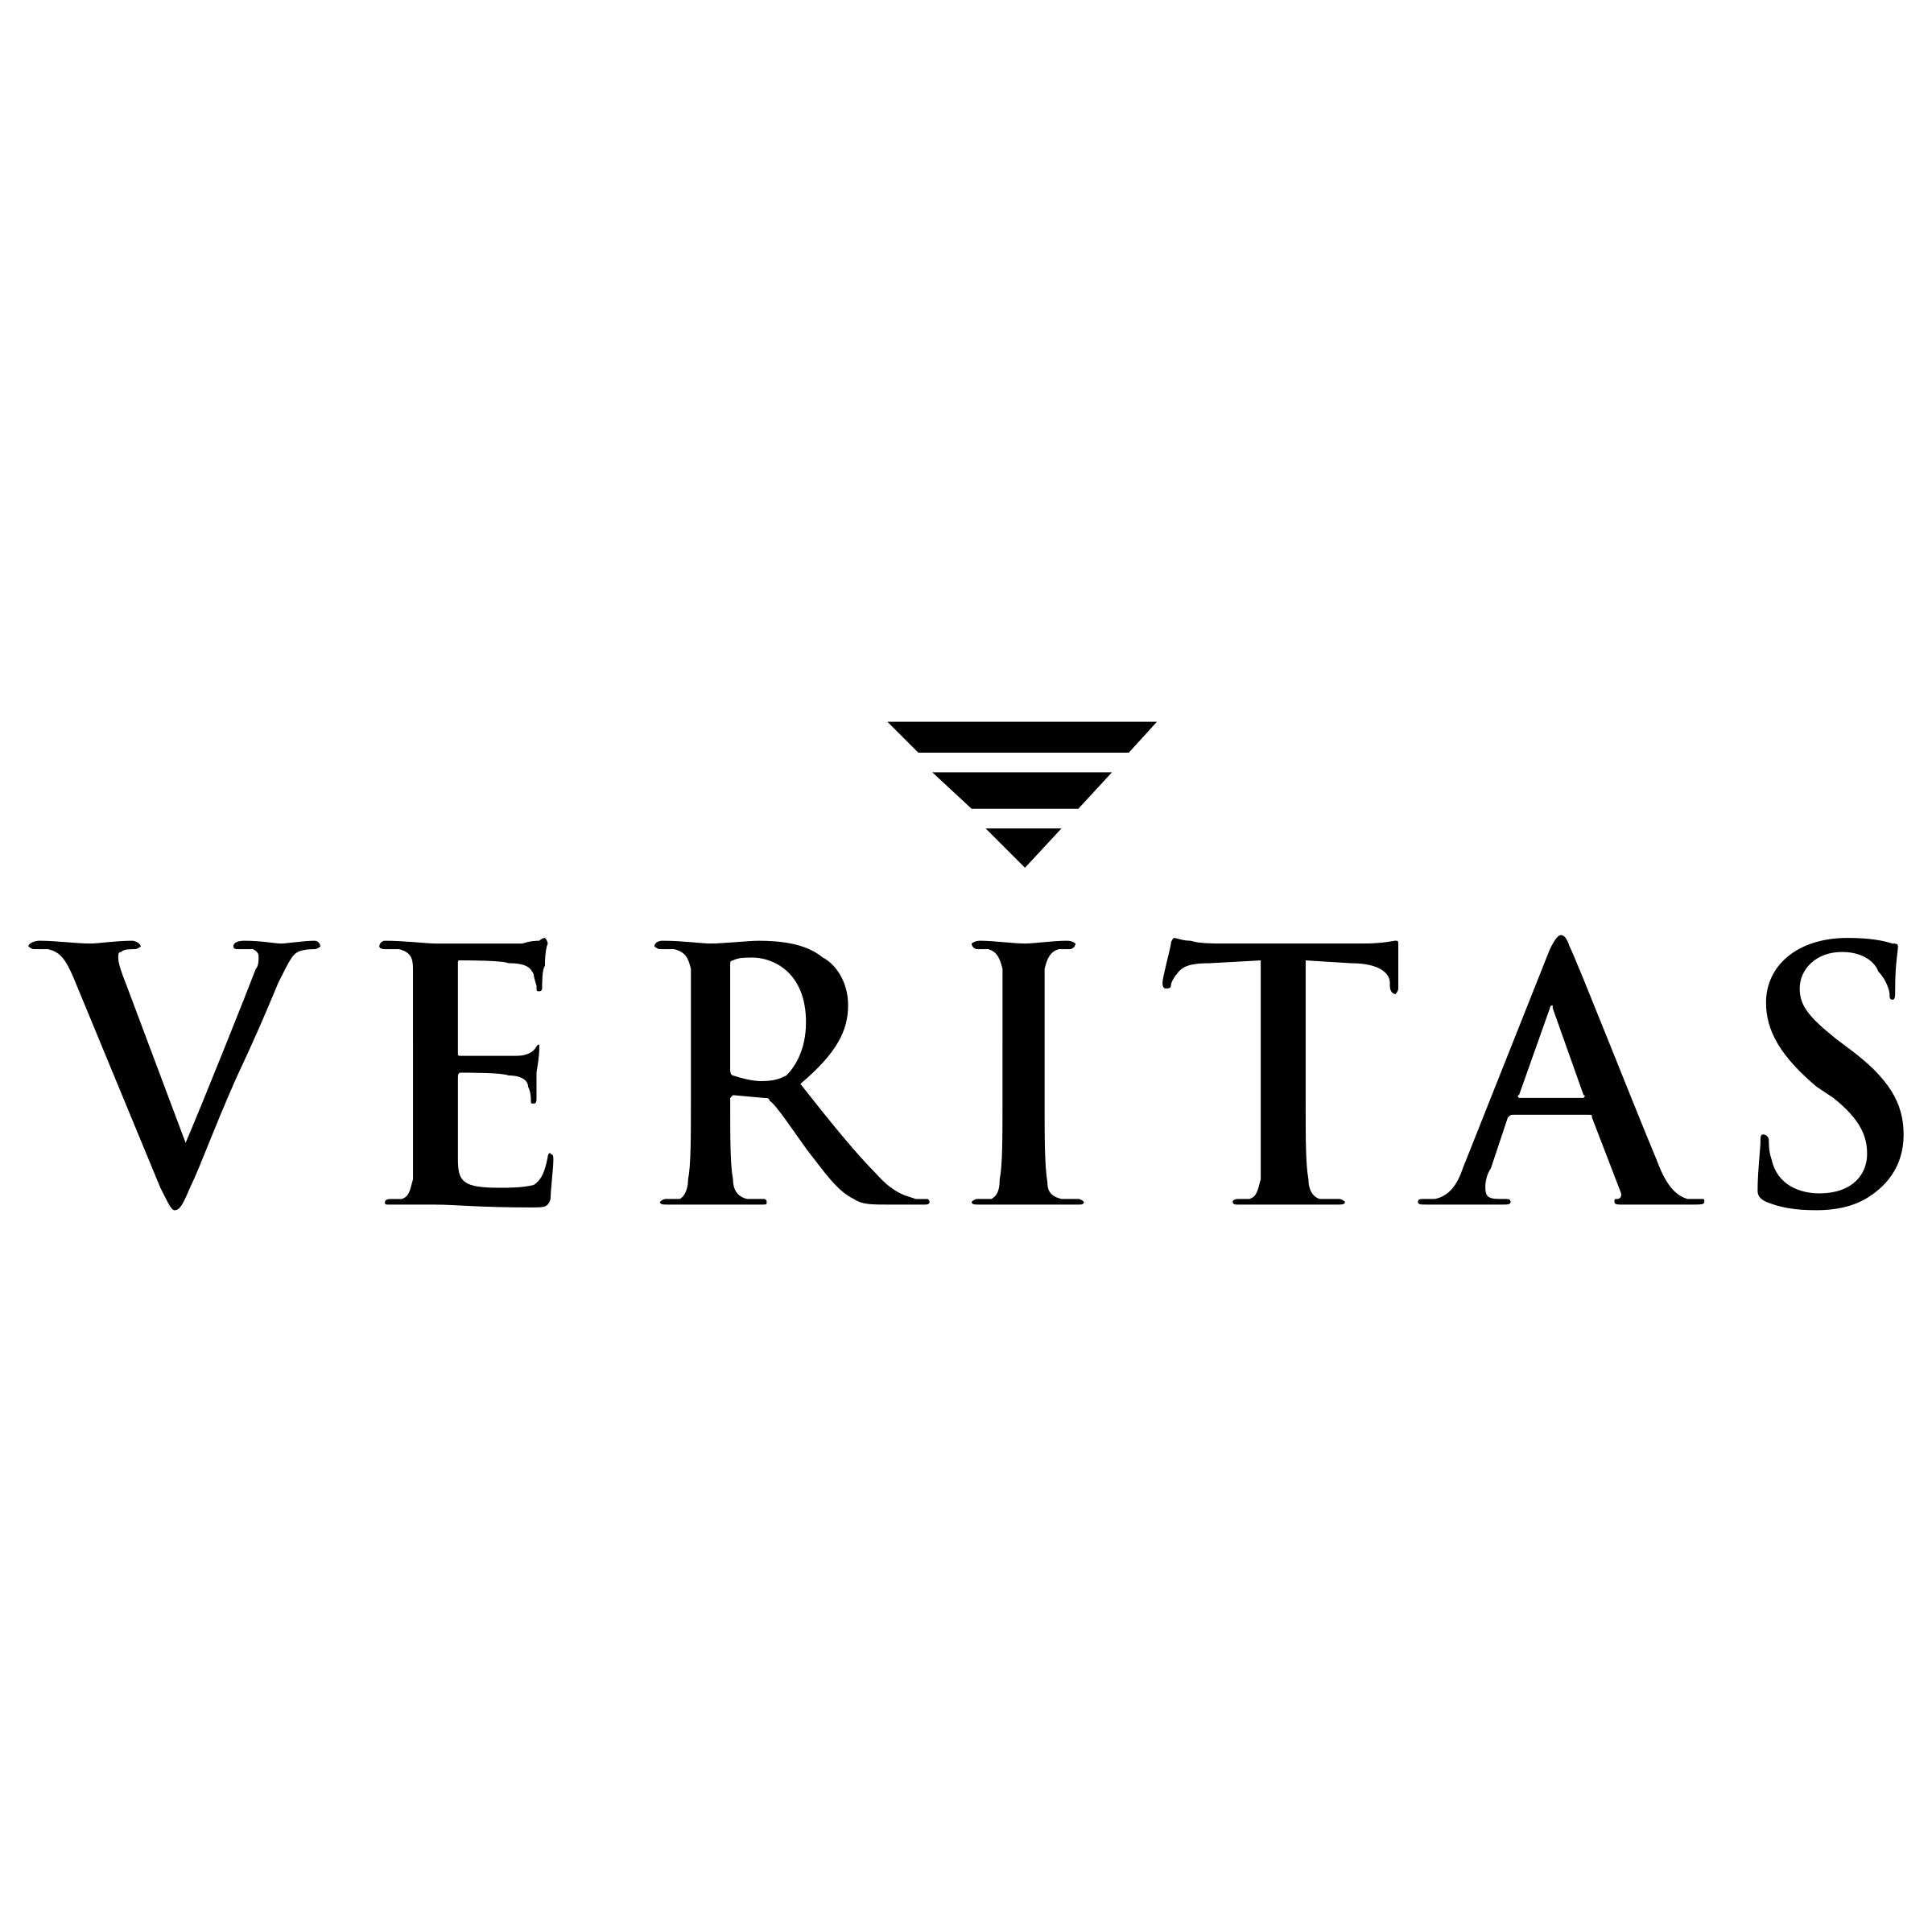 Veritas Logo - Veritas Logo PNG Transparent & SVG Vector